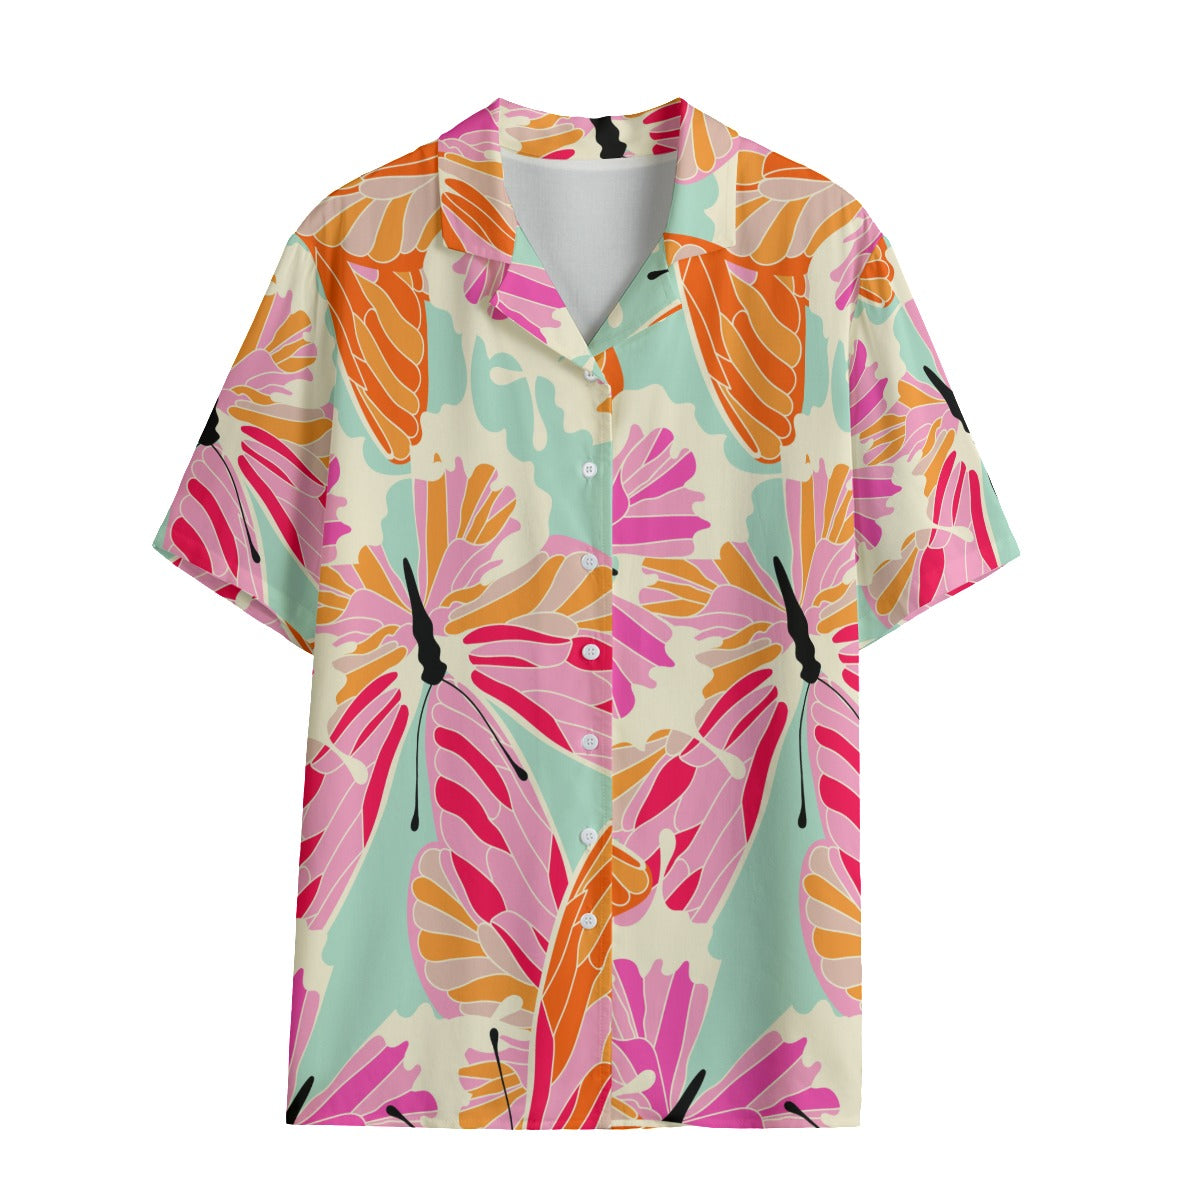 I Love Jesus Women's Rayon Hawaiian Shirt